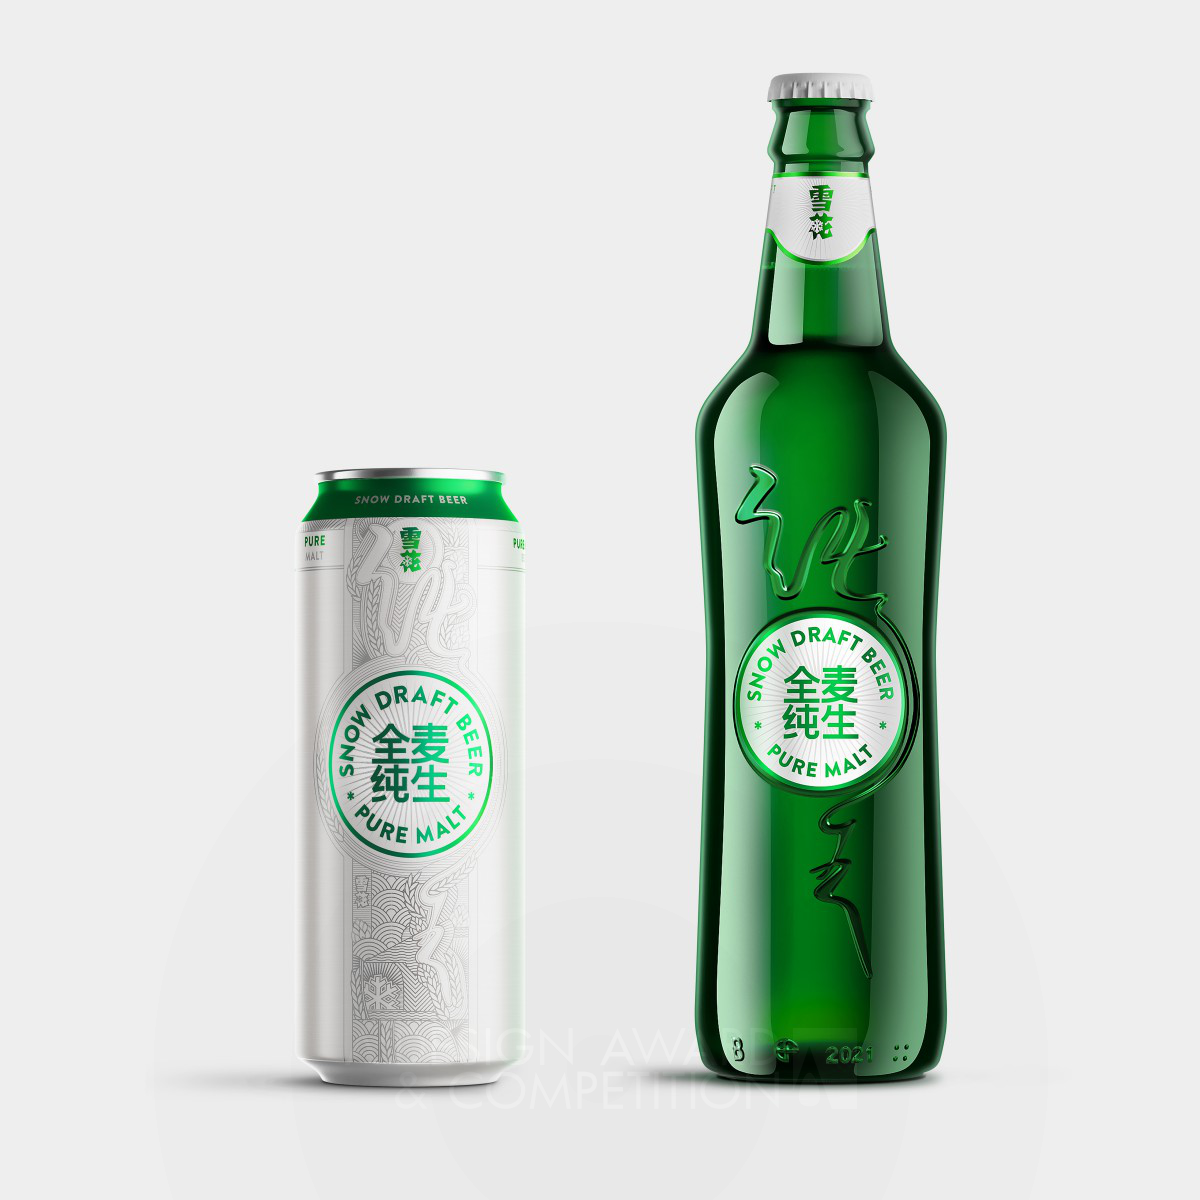 Snow Draft Beer: Redefining Taste and Design